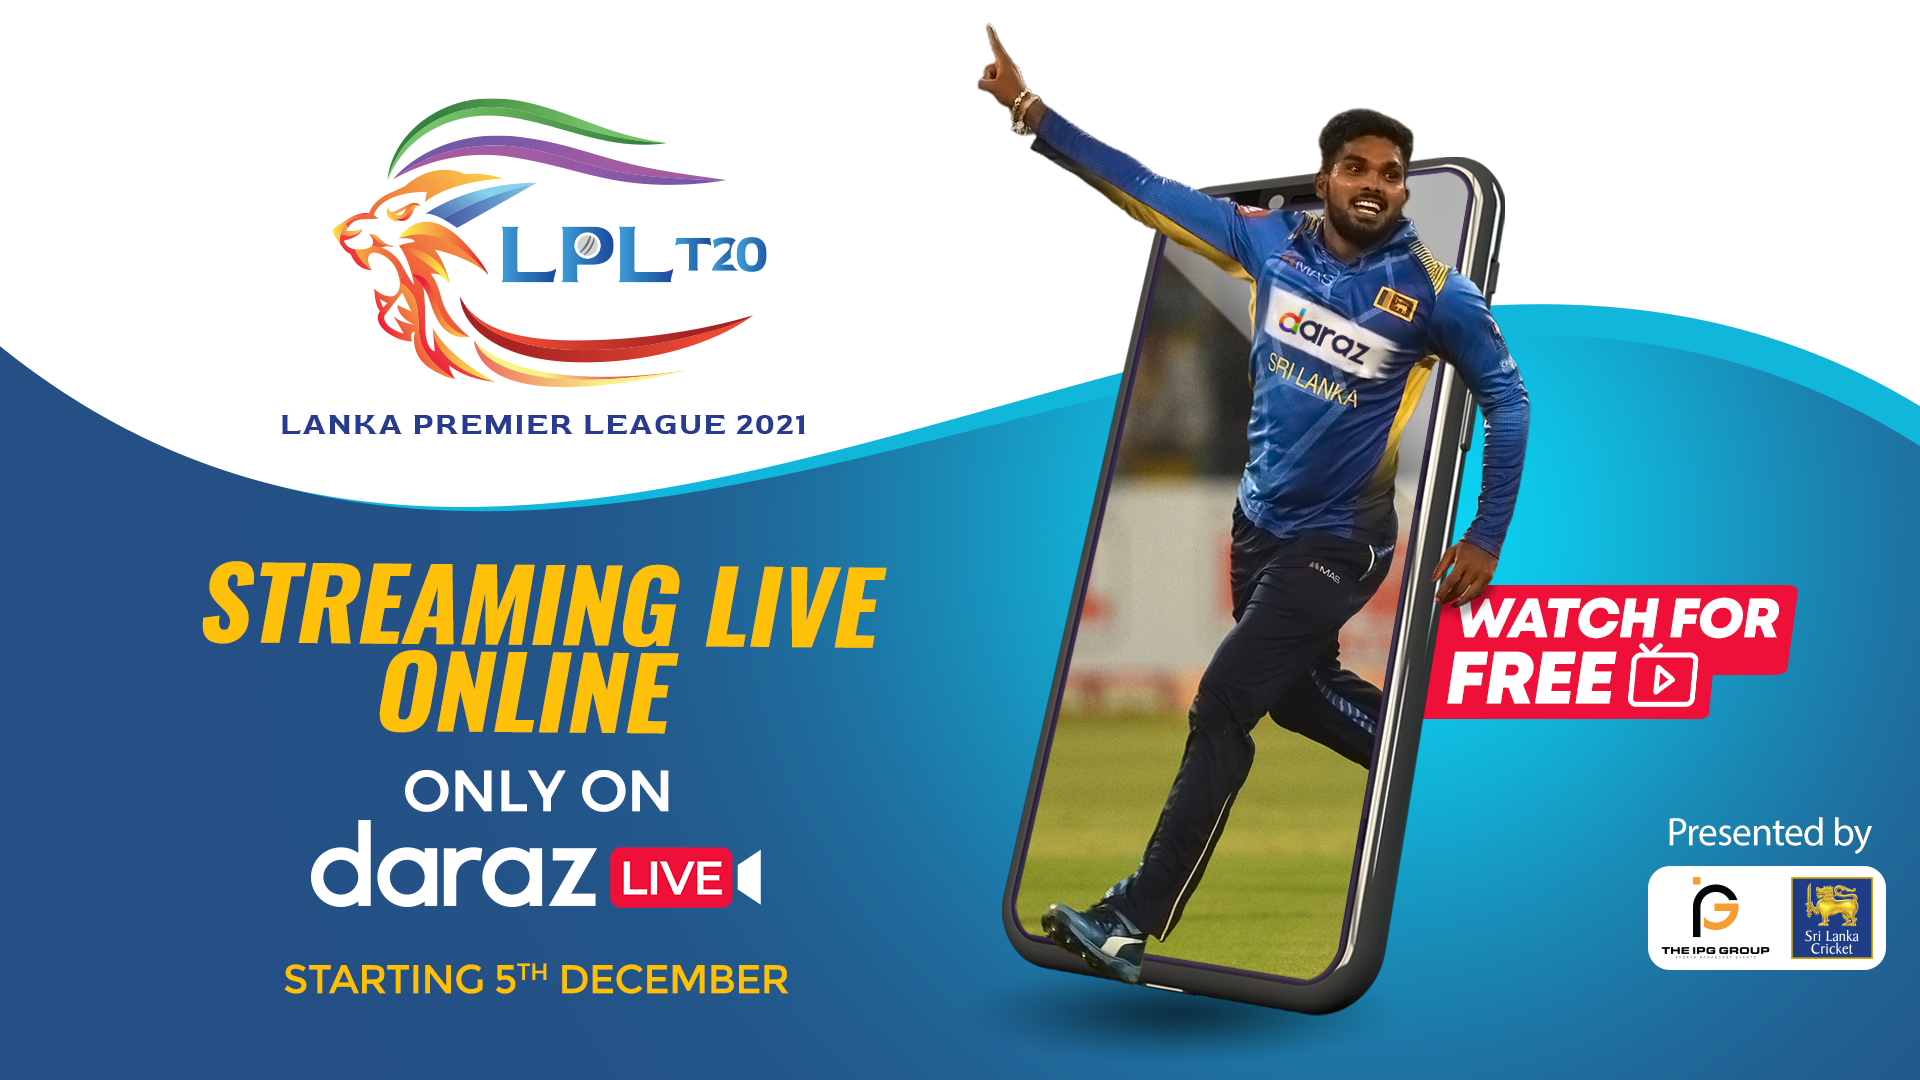 Daraz becomes Exclusive Digital Streaming Partner for Lanka Premier League 2021